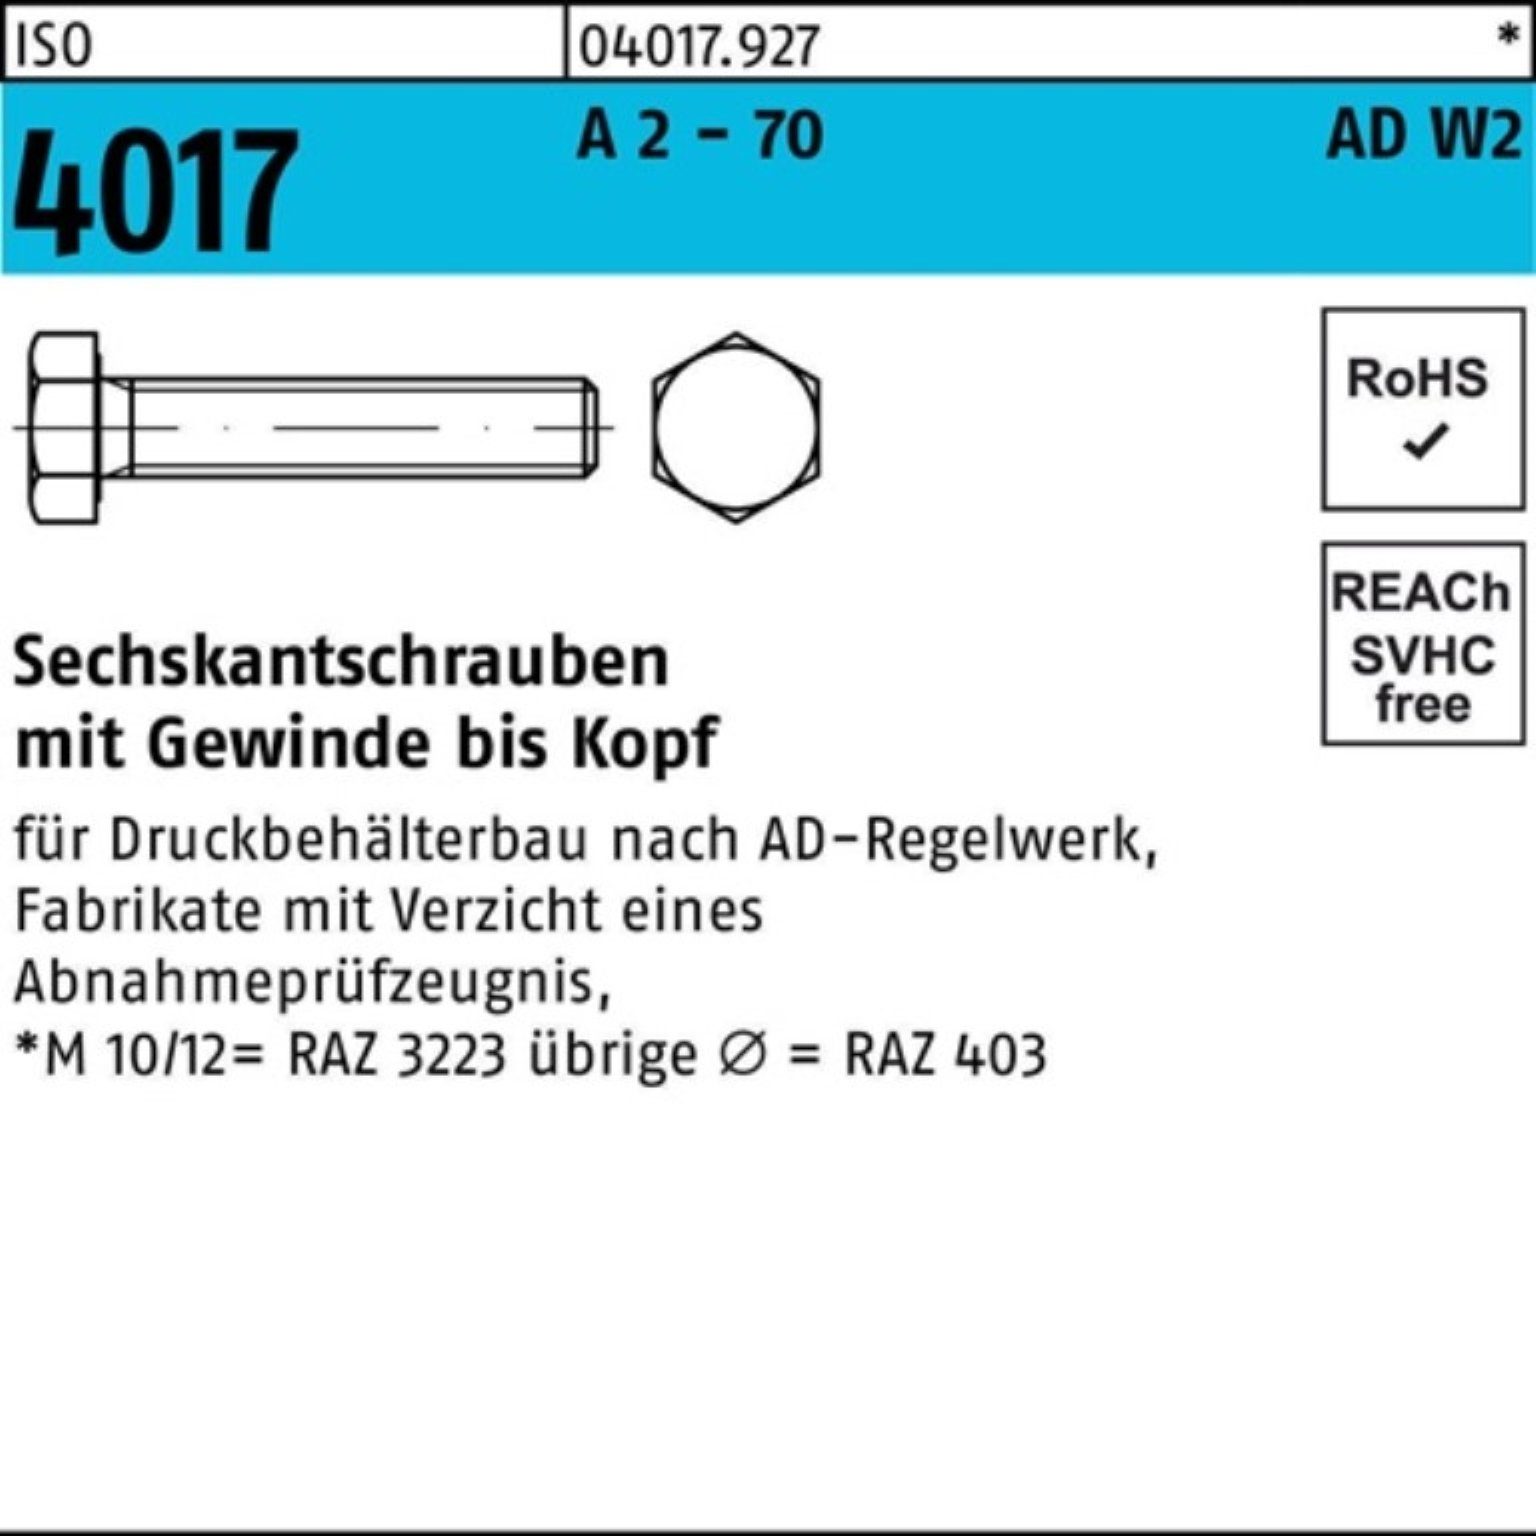 Bufab Sechskantschraube 100er Pack Sechskantschraube ISO 4017 VG M12x 70 A 2 - 70 AD-W2 50 St